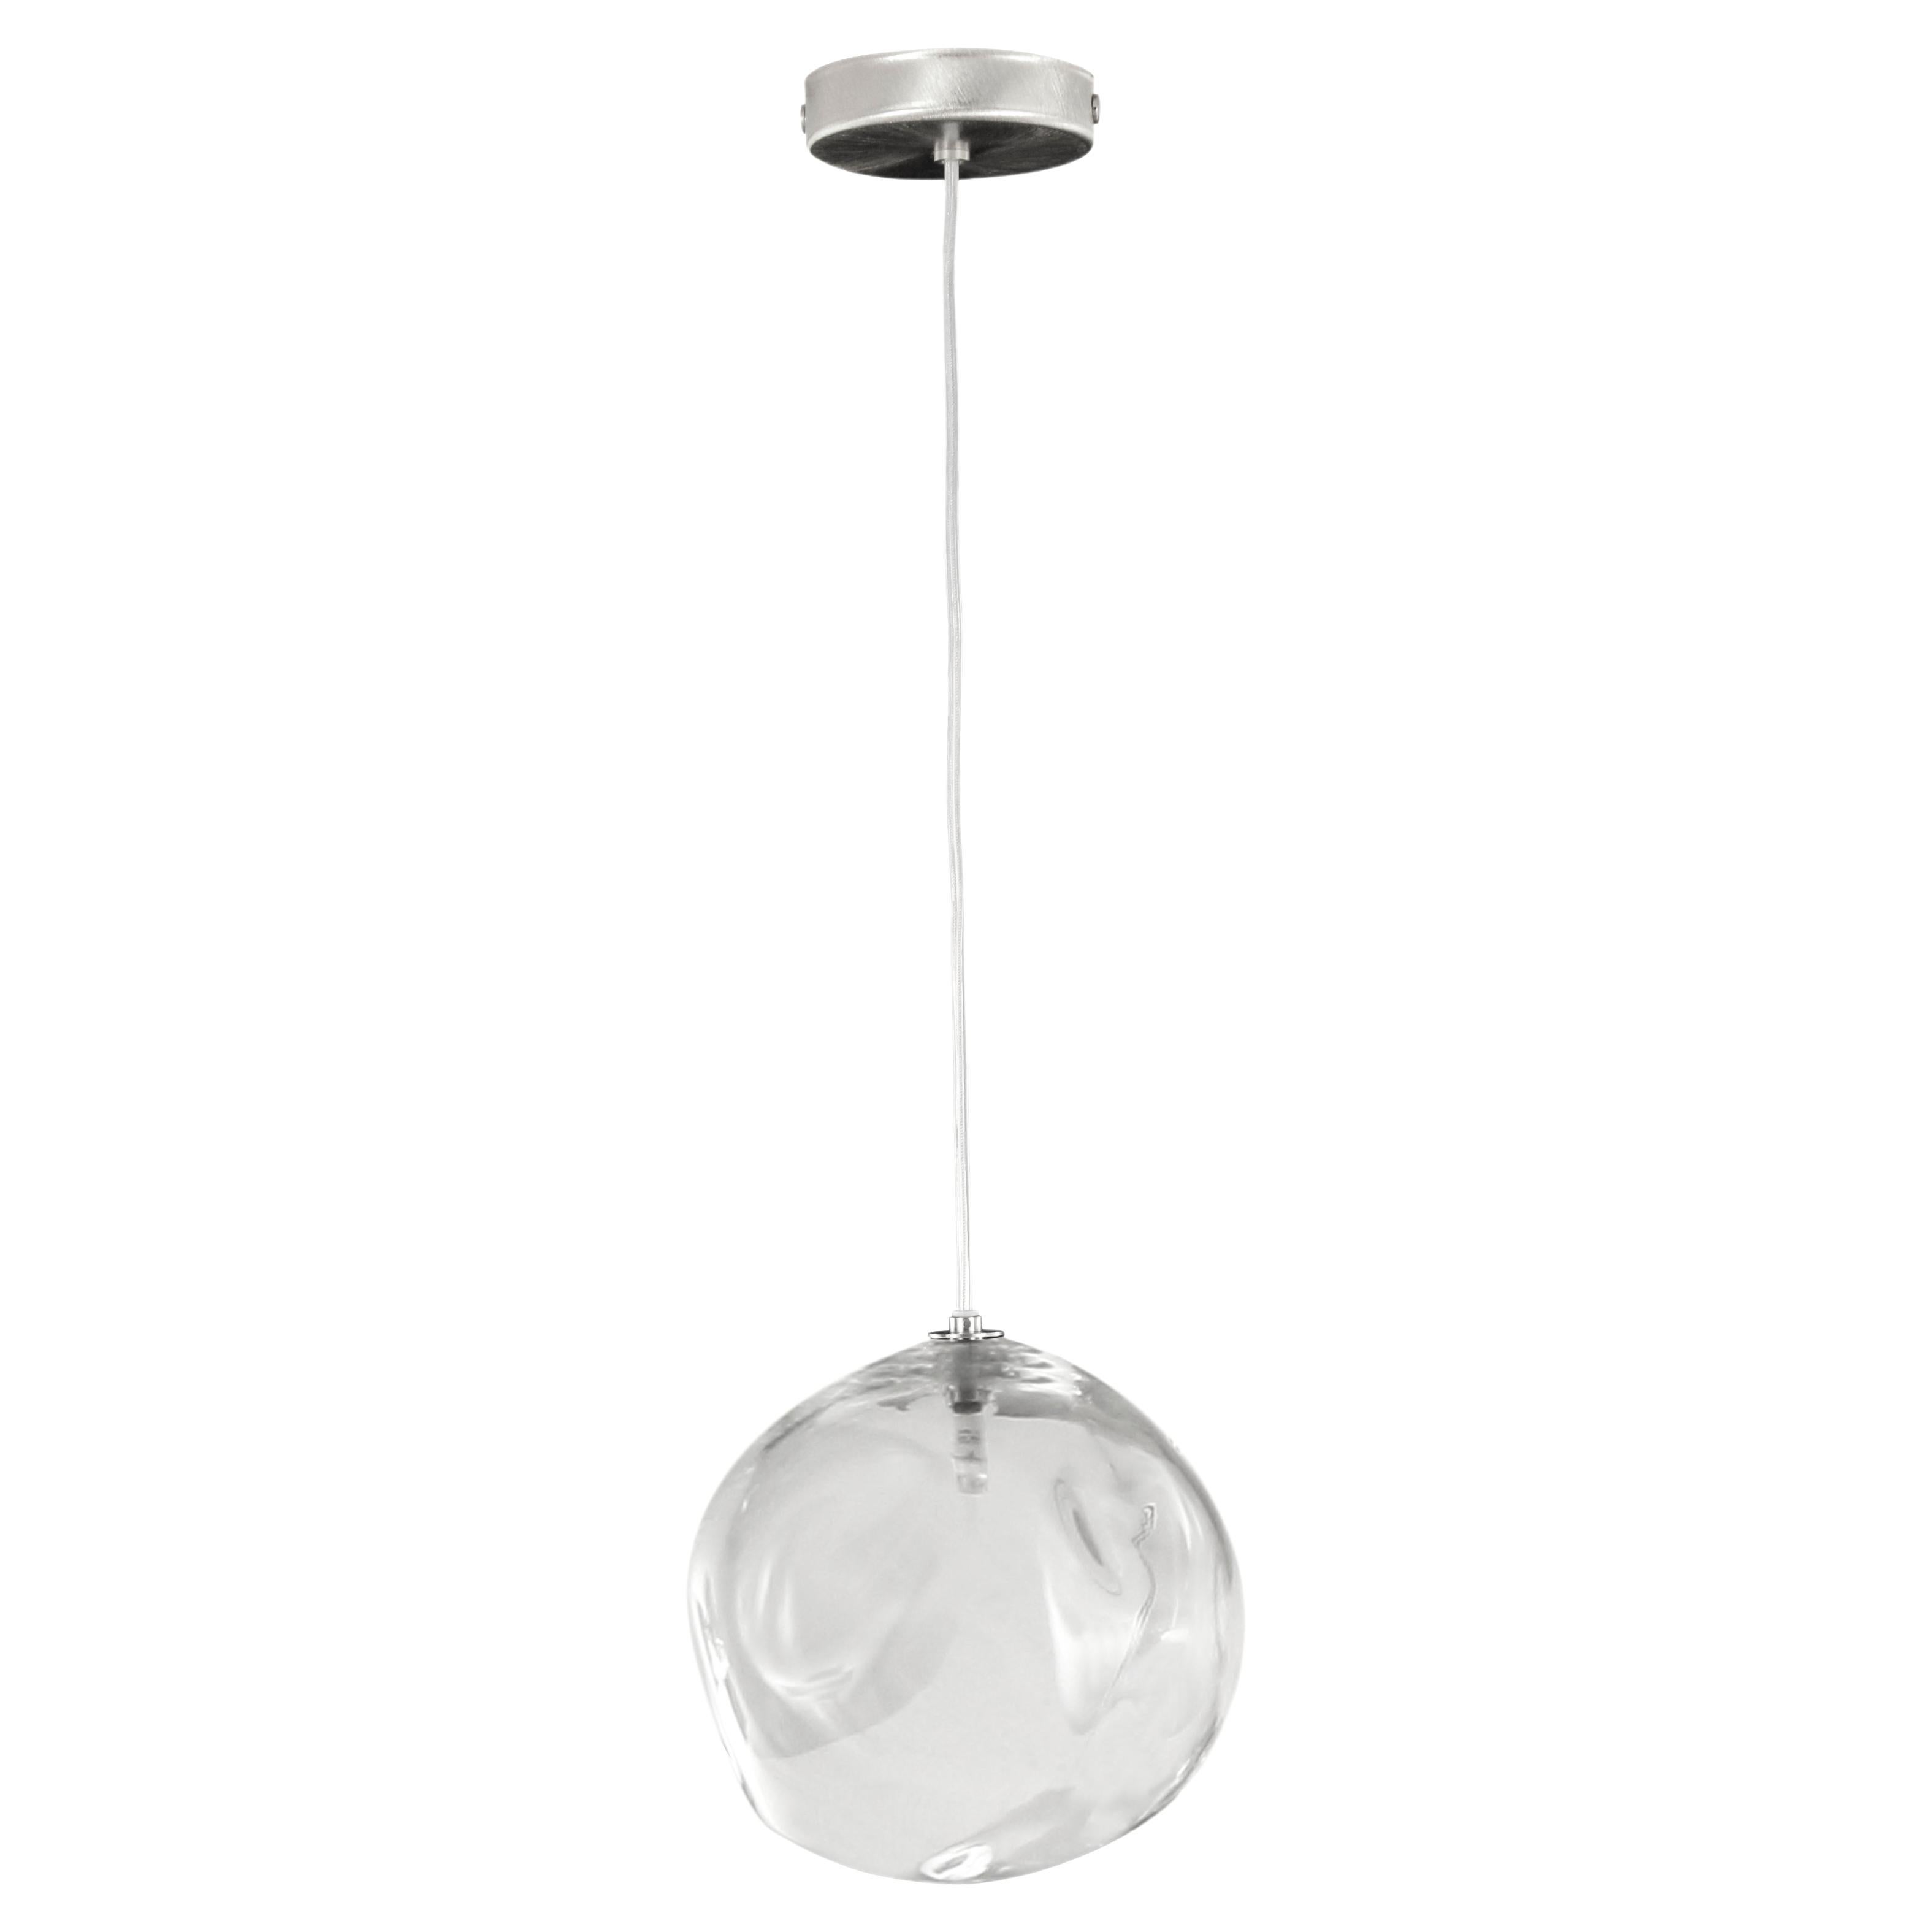 Suspension artistique 1 lampe, sphère en verre de Murano transparent Desafinado par Multiforme